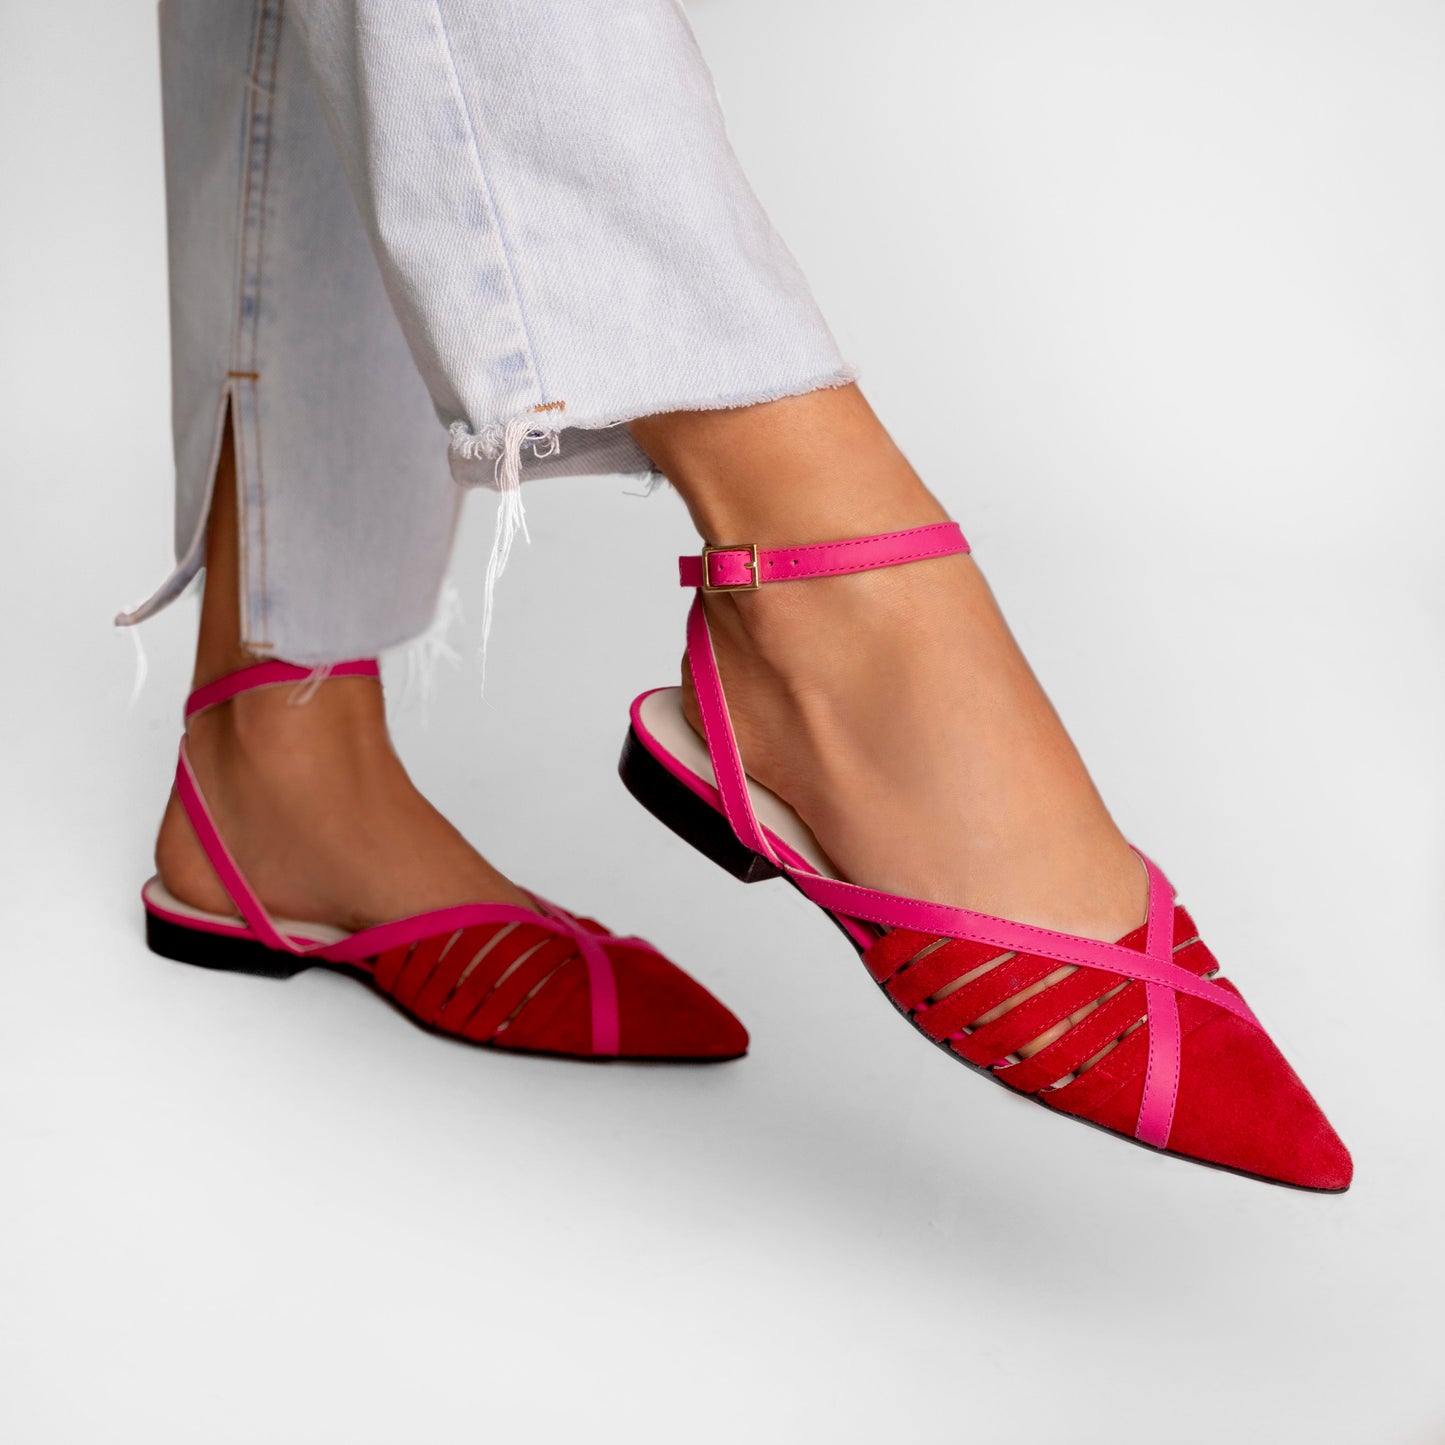 Vinci Shoes Livia Hot Pink Ballerinas